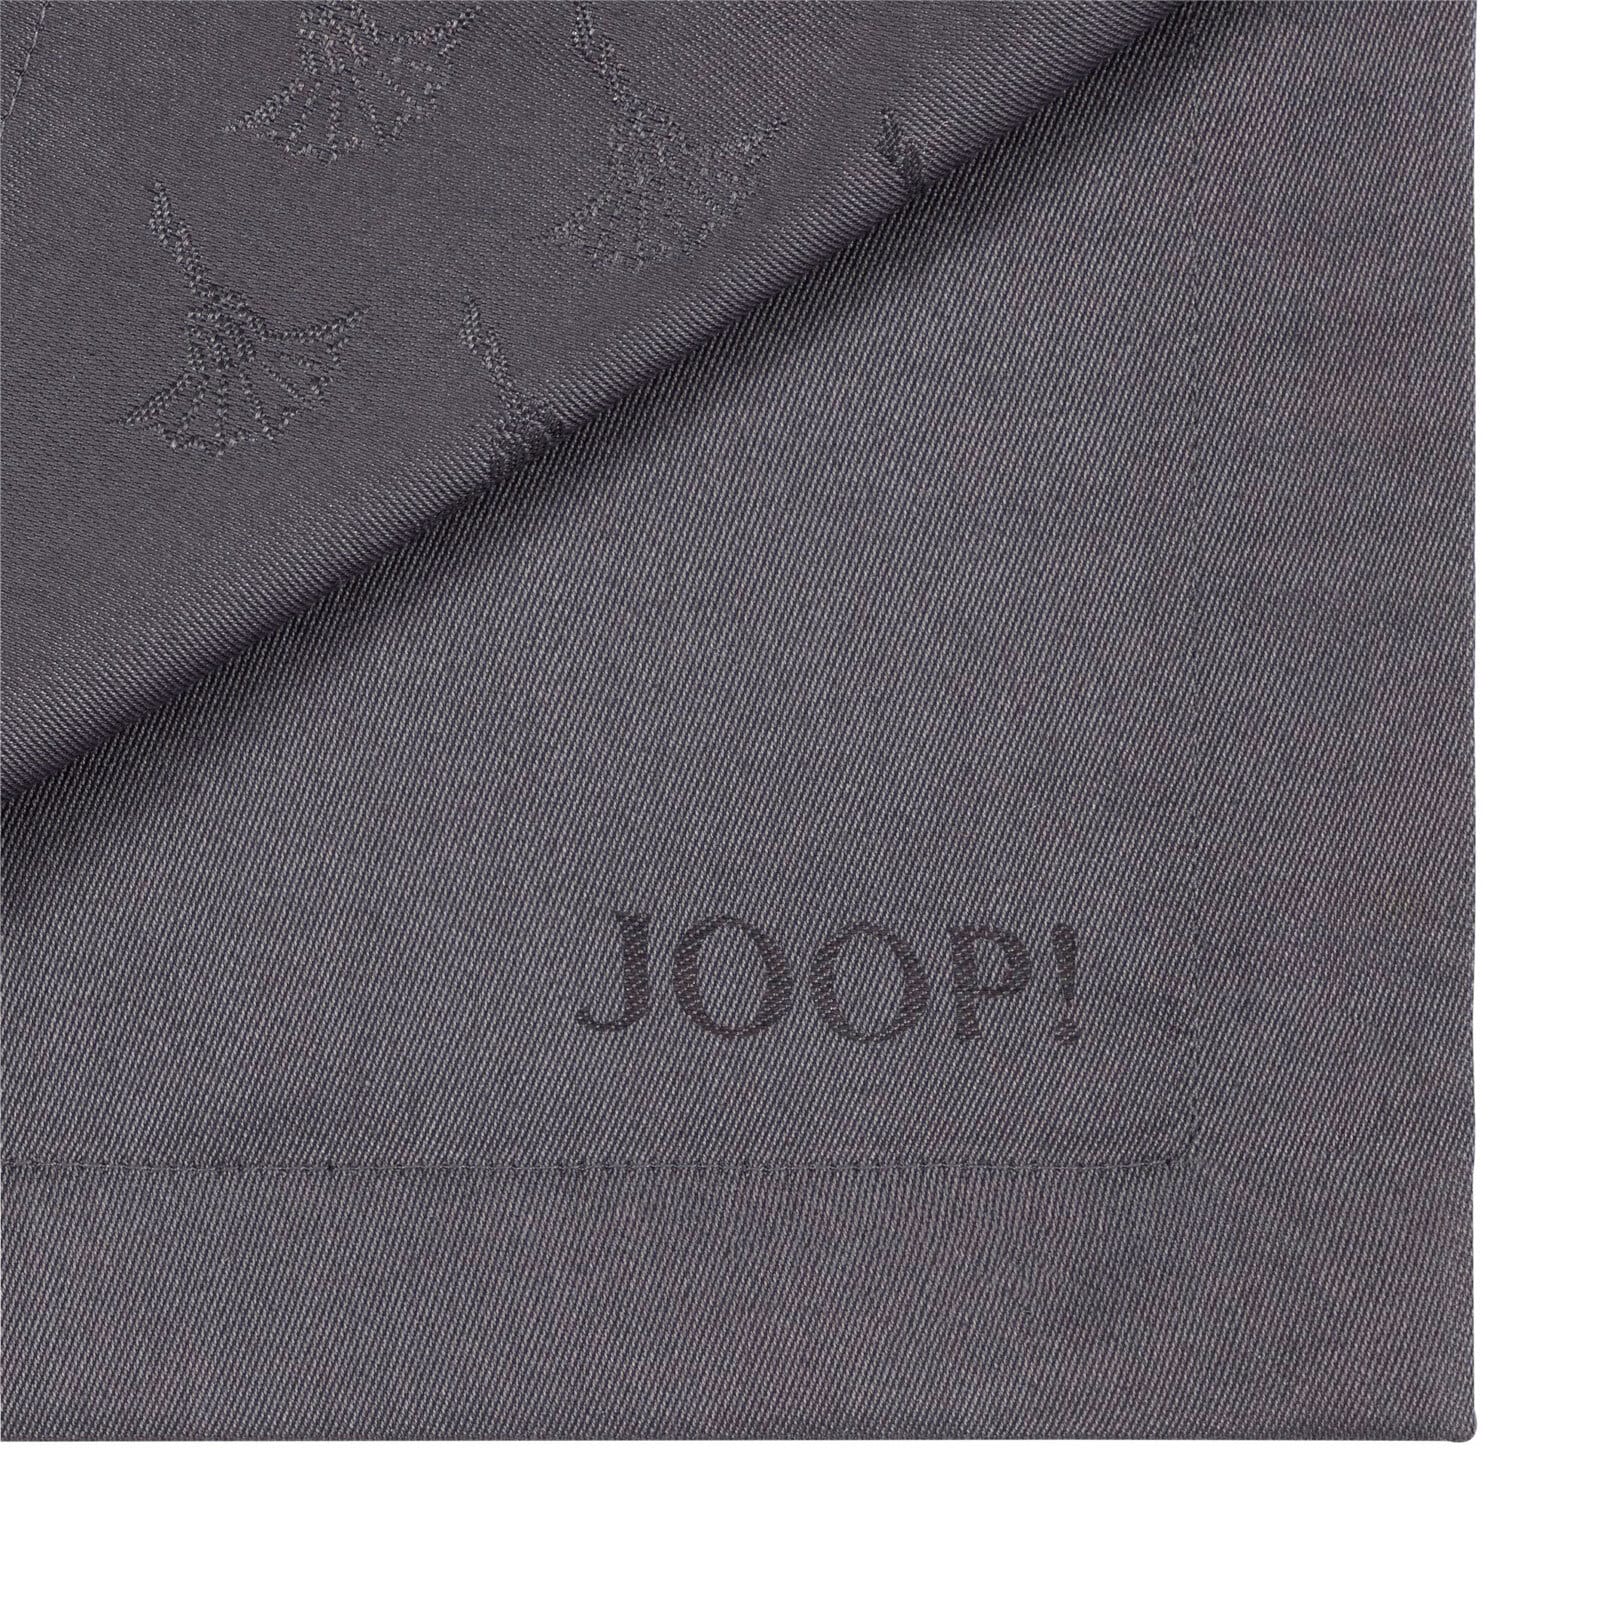 JOOP! Servietten-Set FADED CORNFLOWER 2er Set graphitgrau